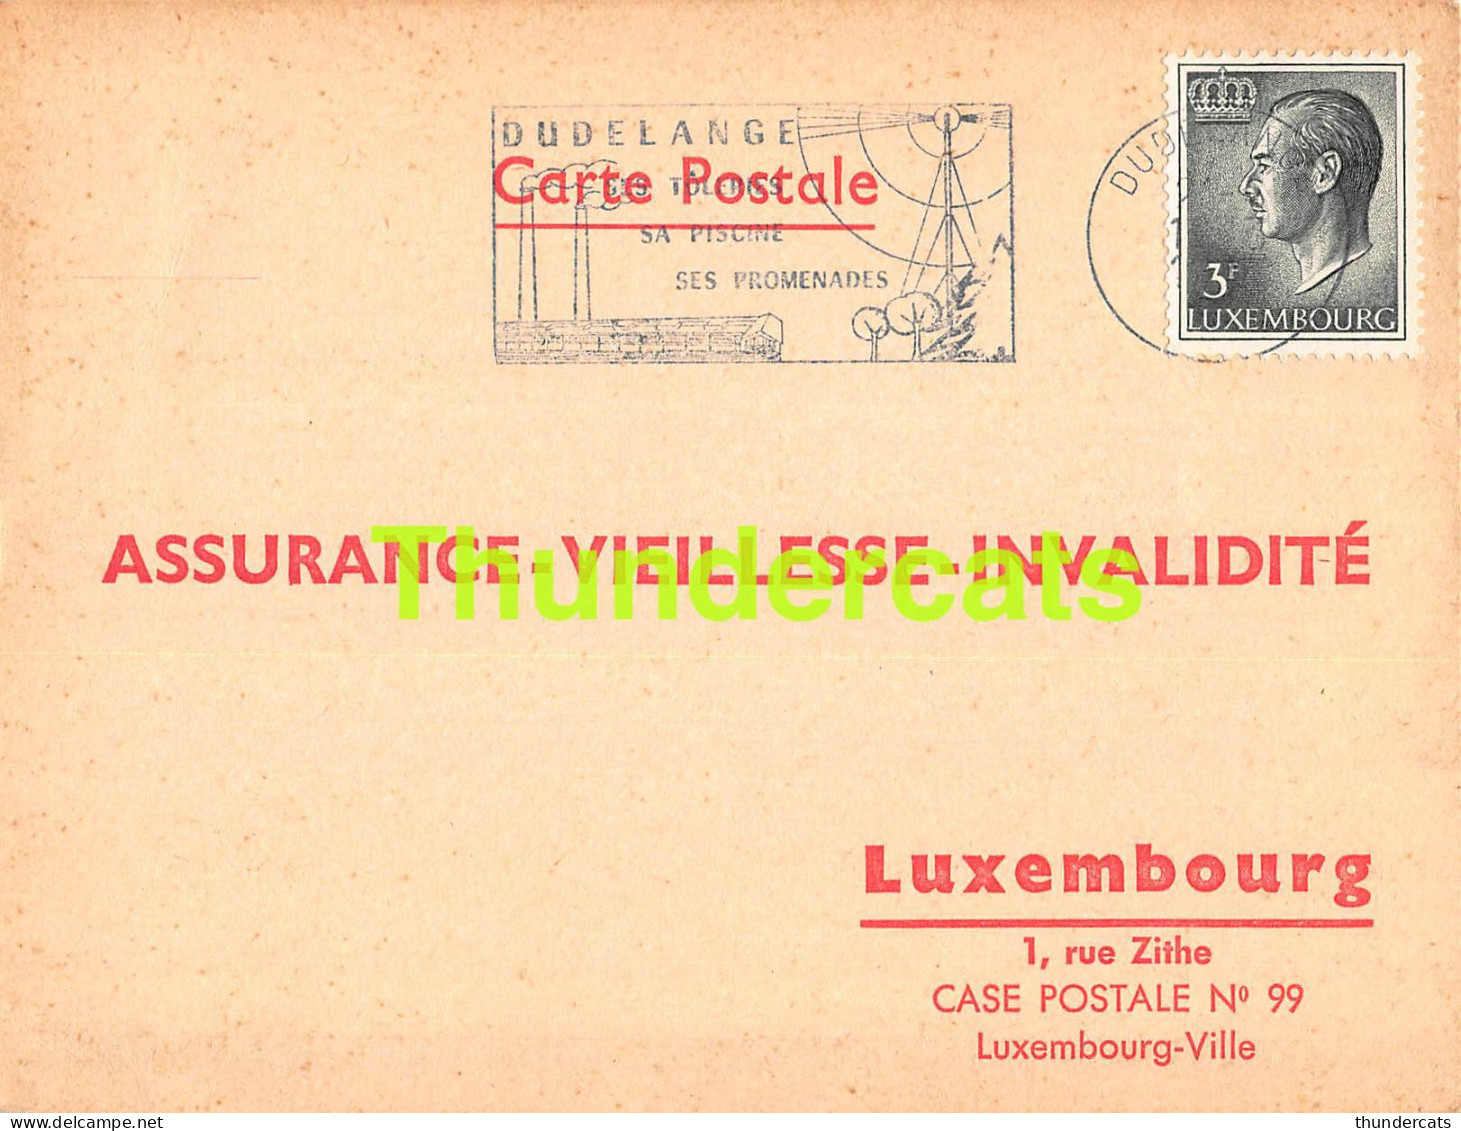 ASSURANCE VIEILLESSE INVALIDITE LUXEMBOURG 1973 NOTHAR STROH DUDELANGE  - Briefe U. Dokumente